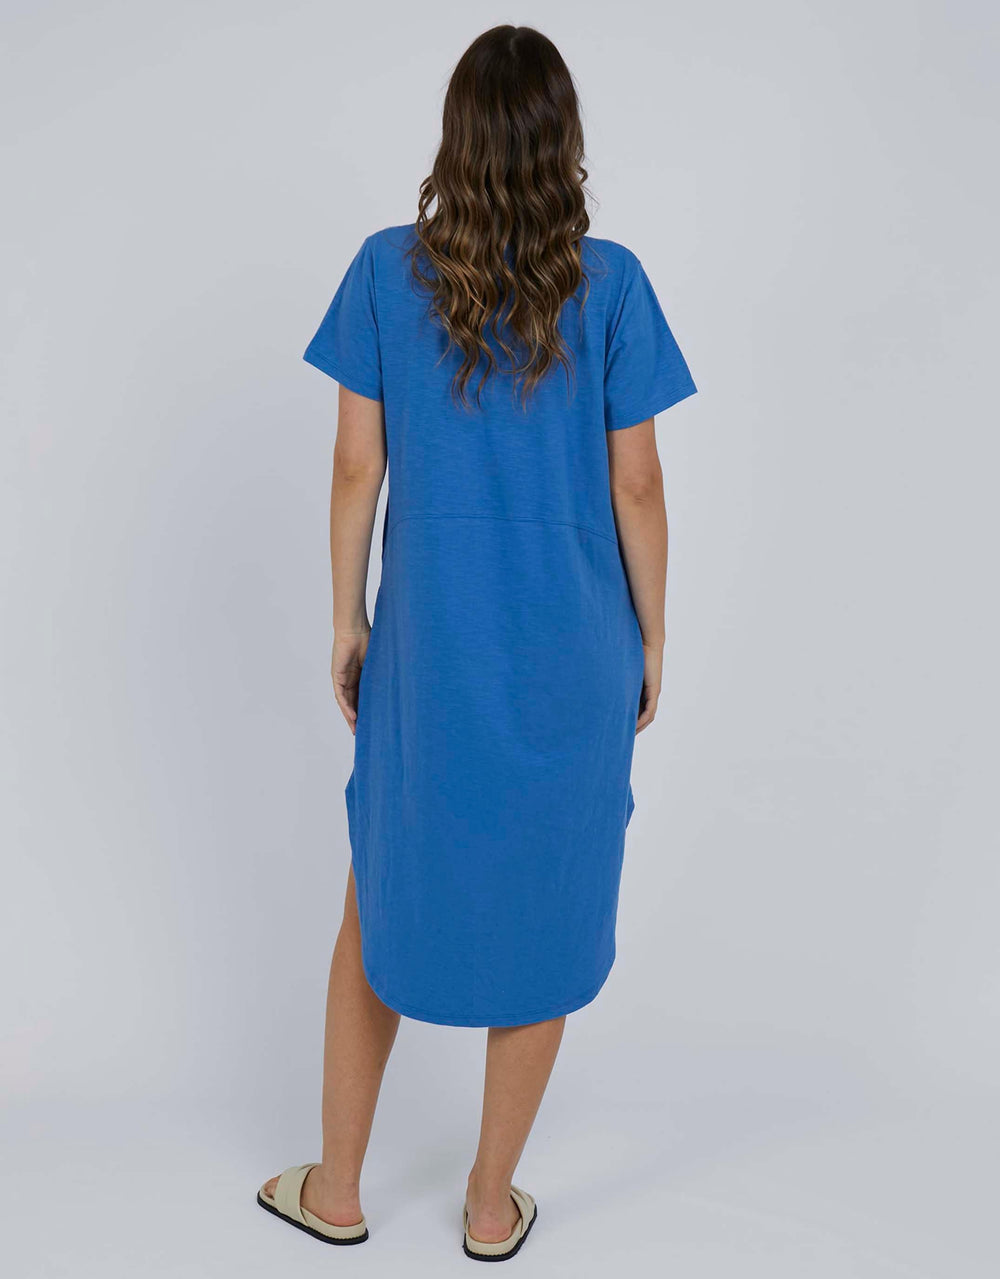 Bayley Dress - Blue - paulaglazebrook